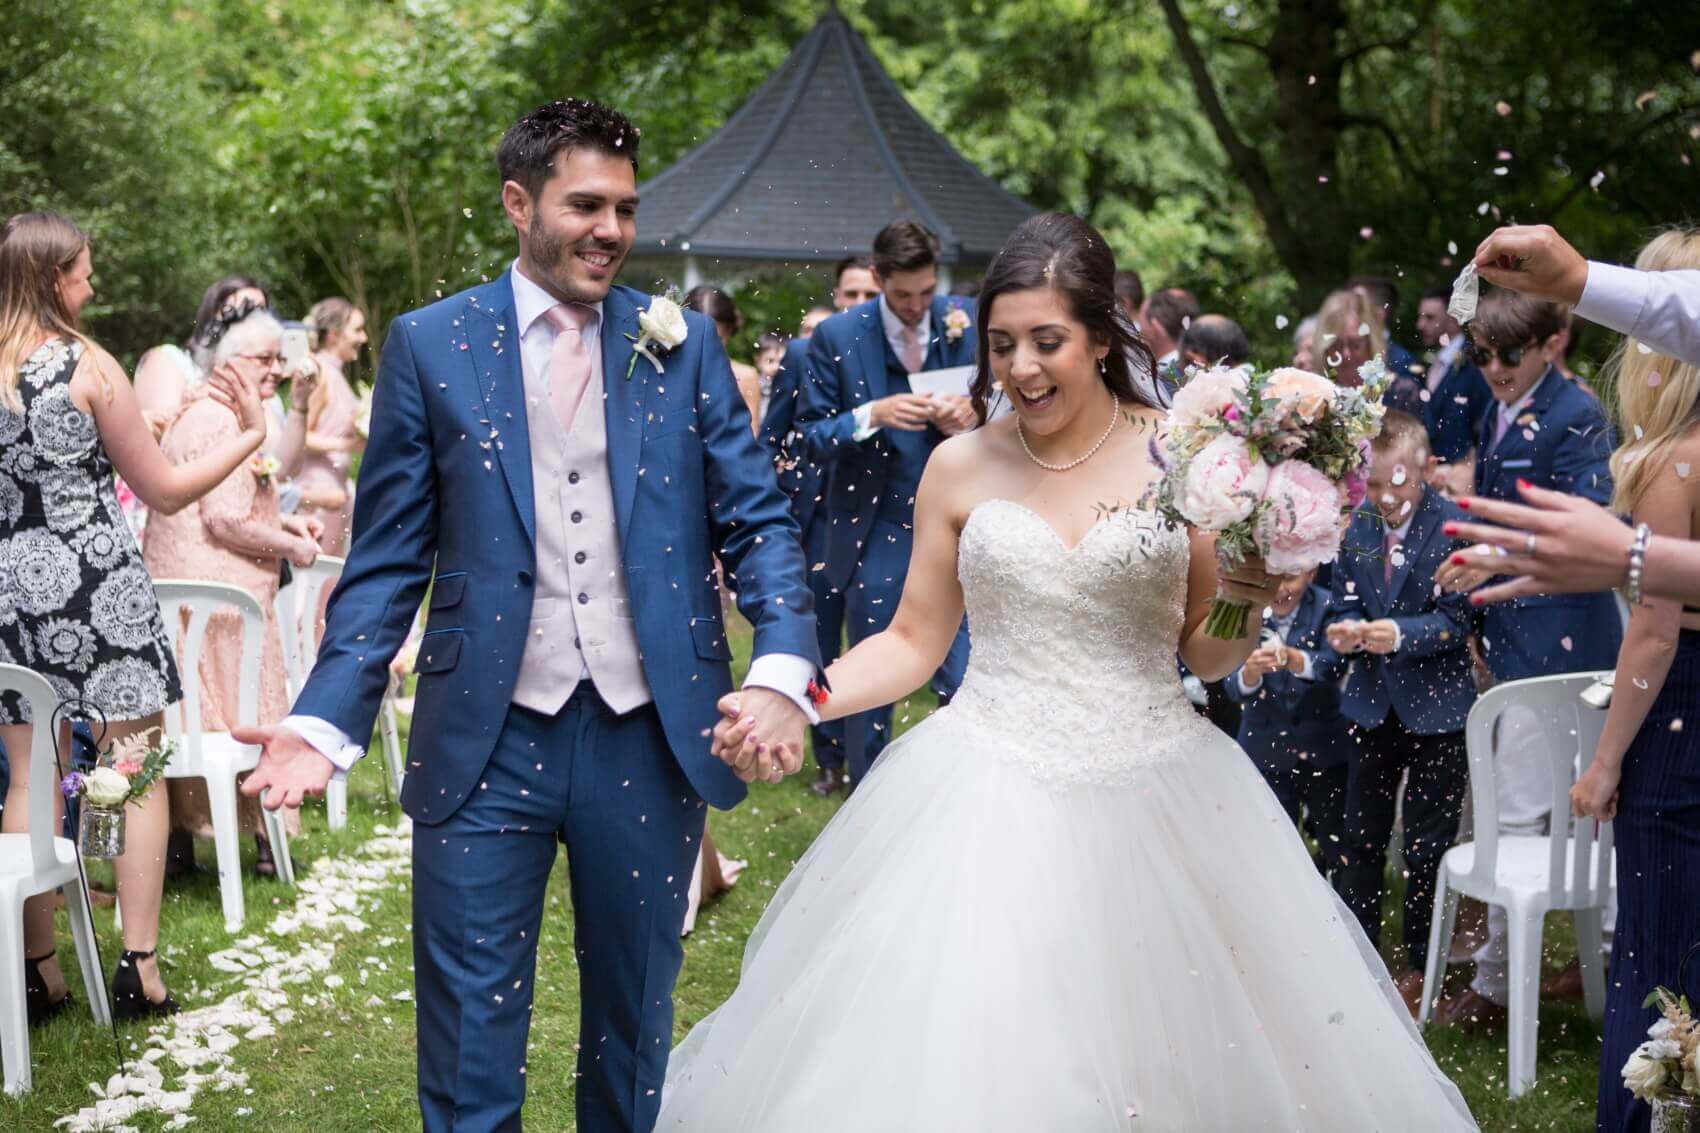 Outdoor wedding ceremony at Milling Barn Hertfordshire. Couple enjoying the confetti .